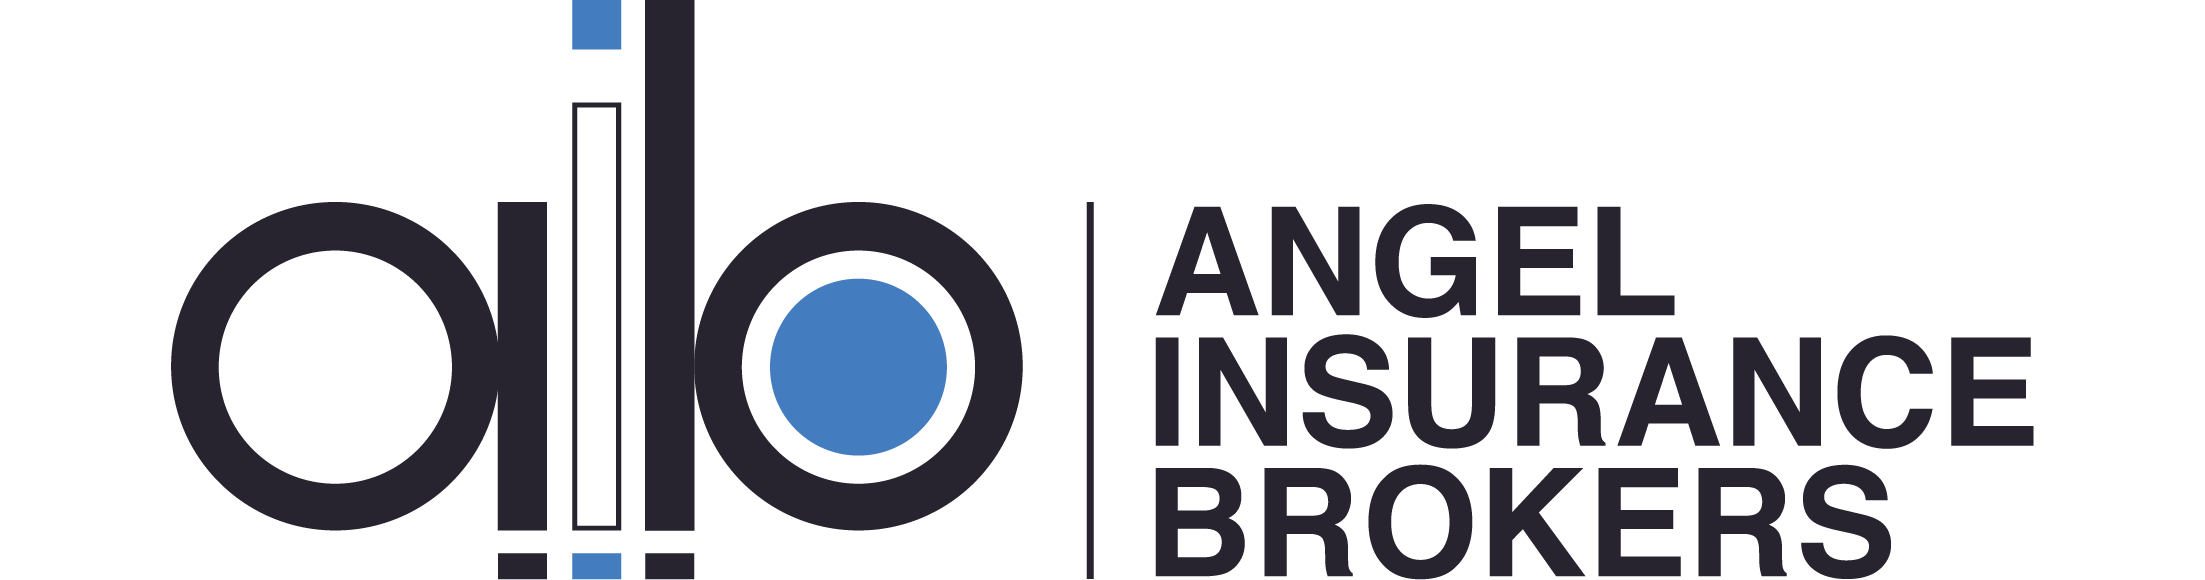 Angel Insurance Brokers Australia